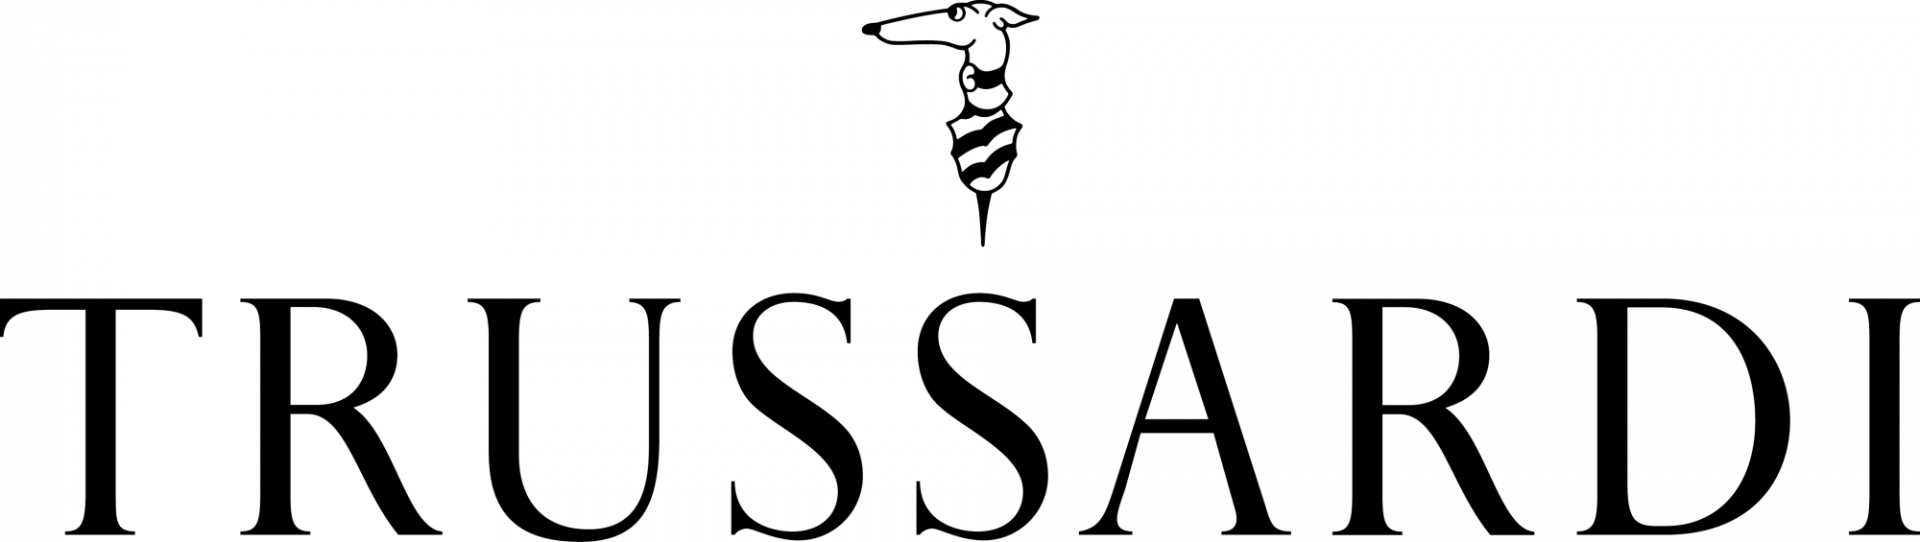 Труссарди логотип